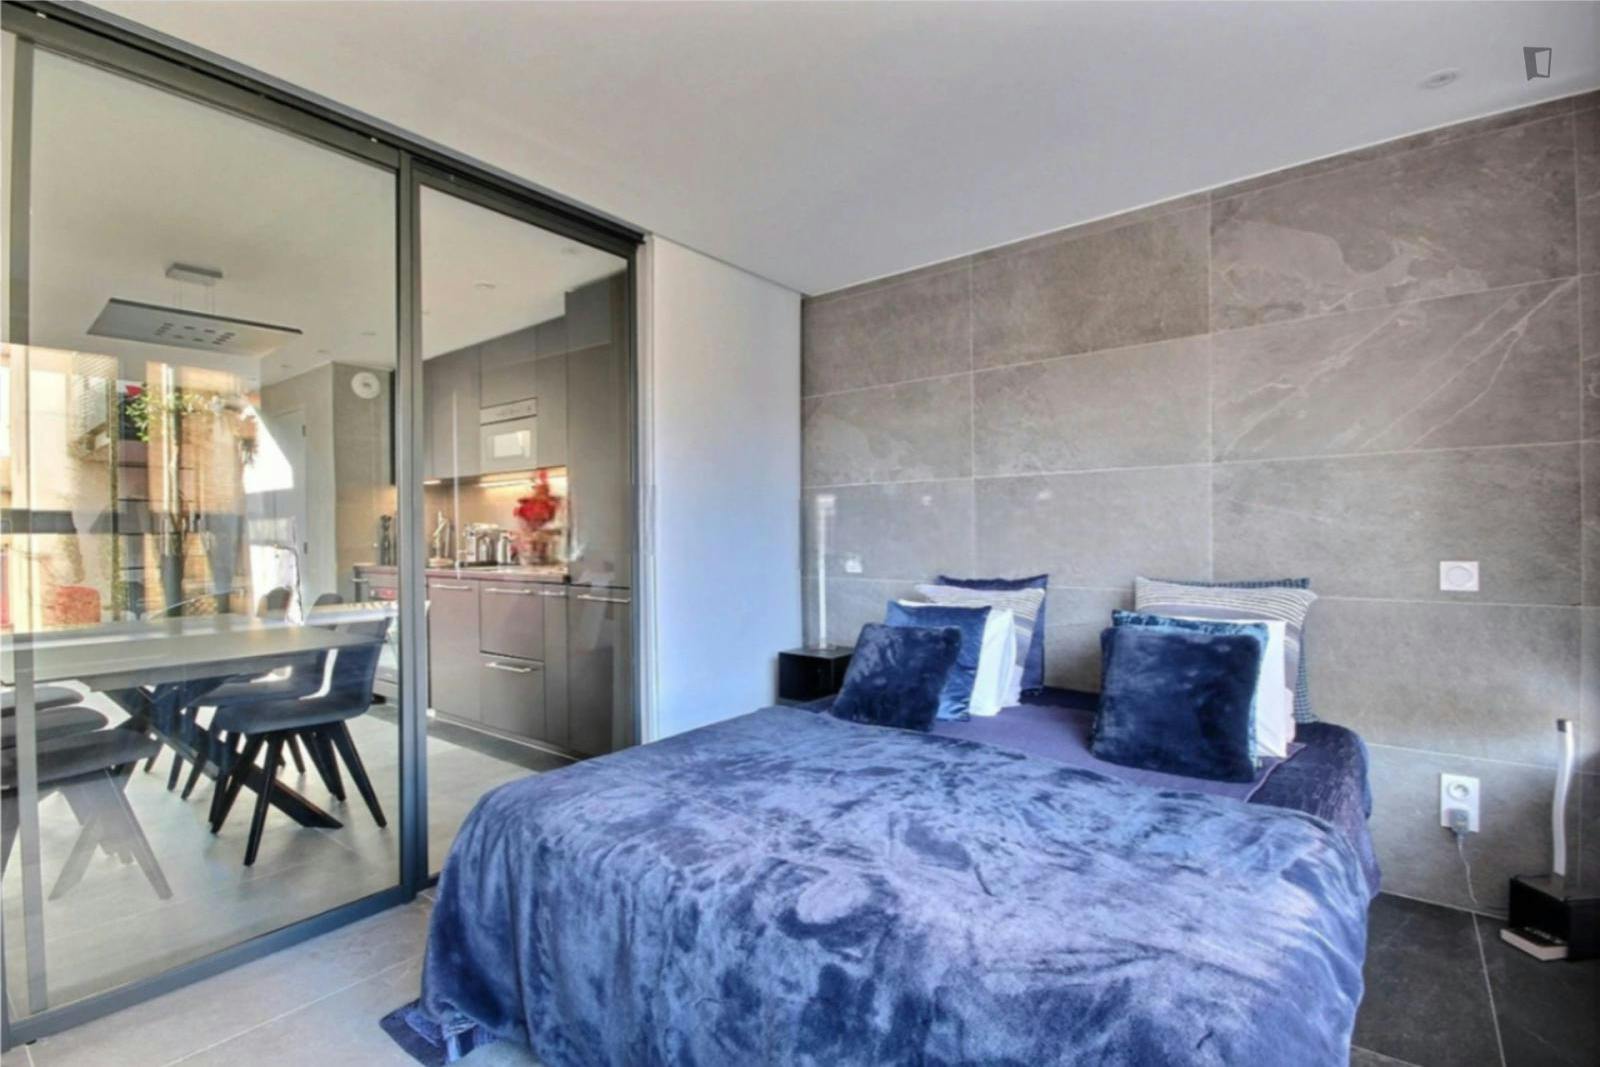 Excellent 2-bedroom apartment in Prince–Marmottan